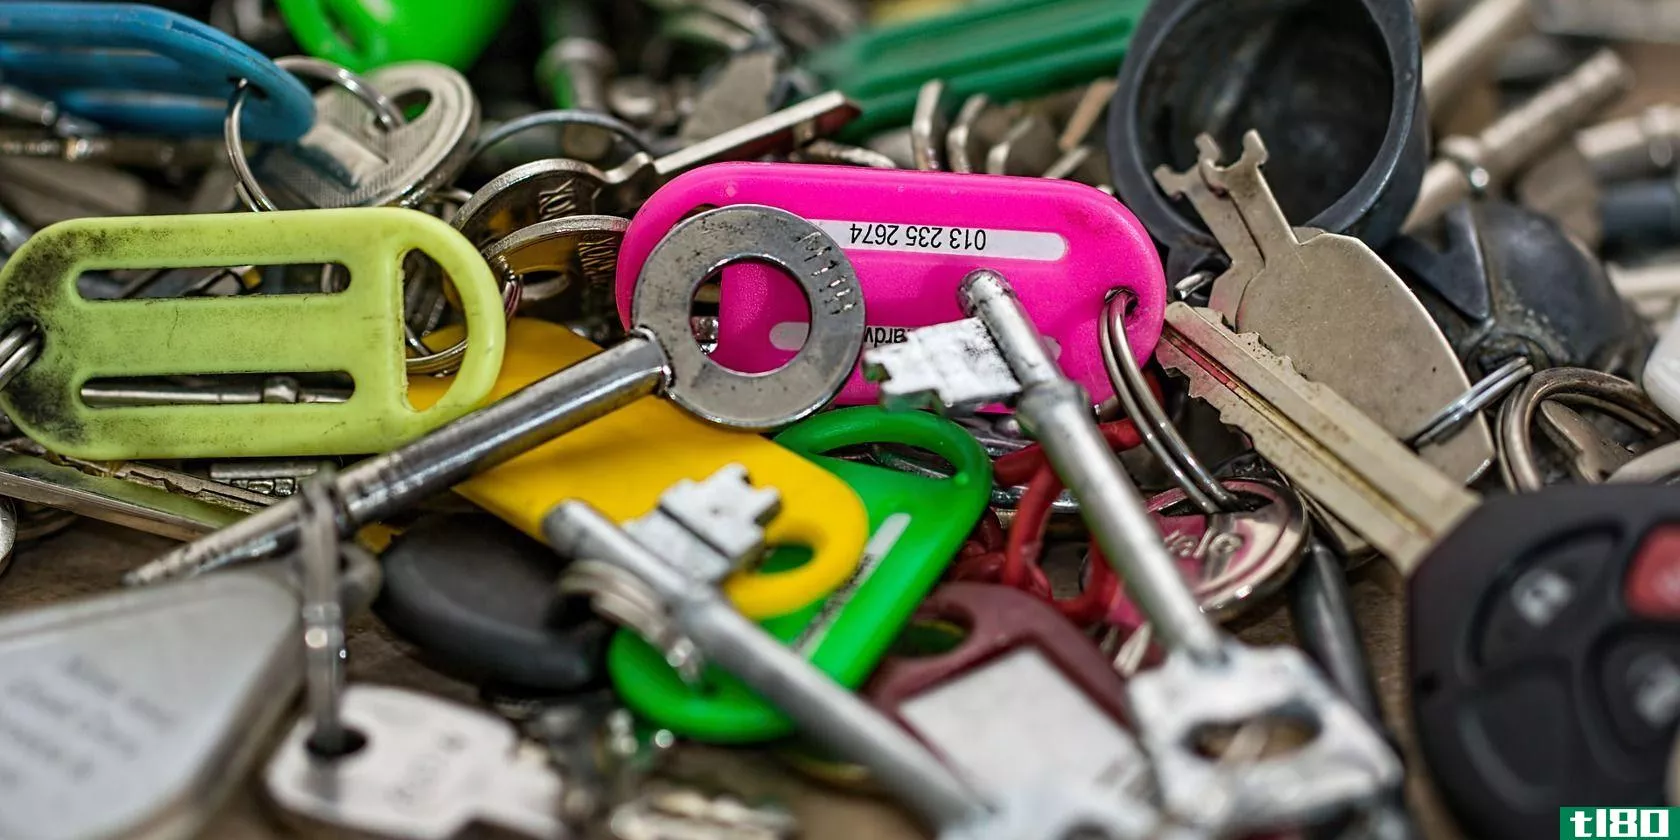 Many keys and colored key fobs